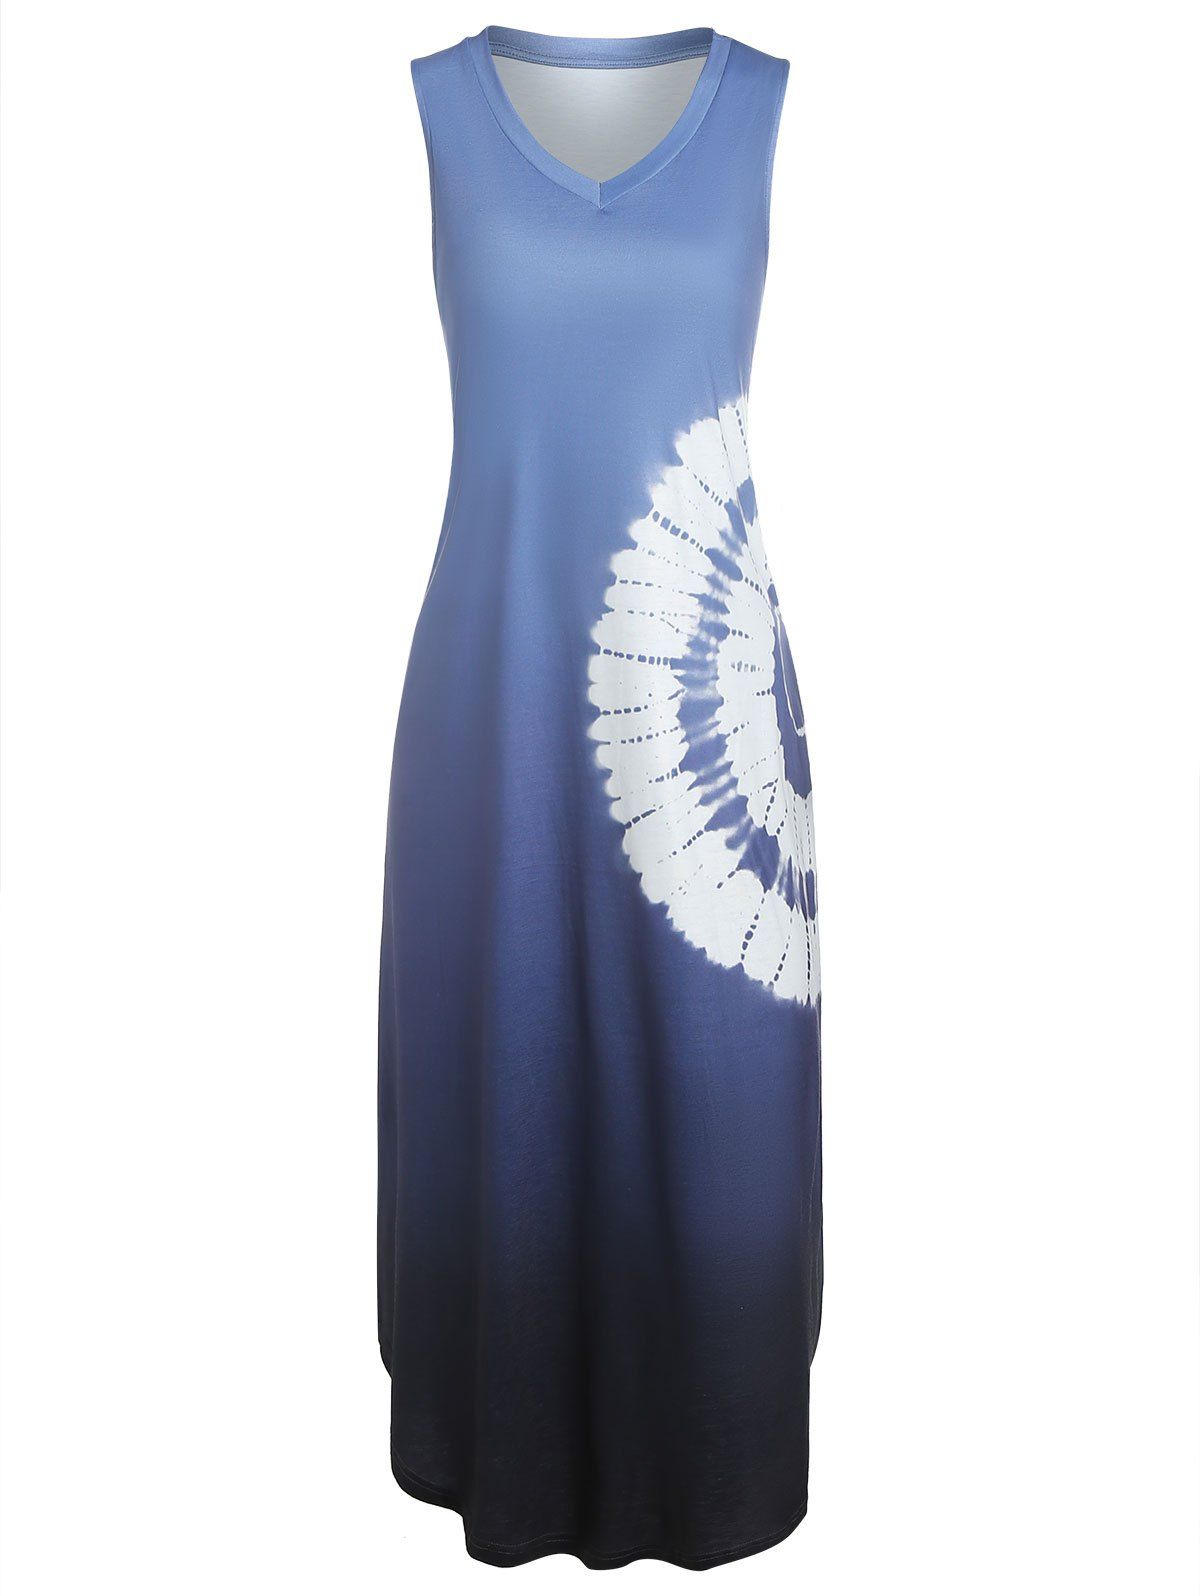 Tie Dye Print Side Slit Trapeze Dress - DEEP BLUE S